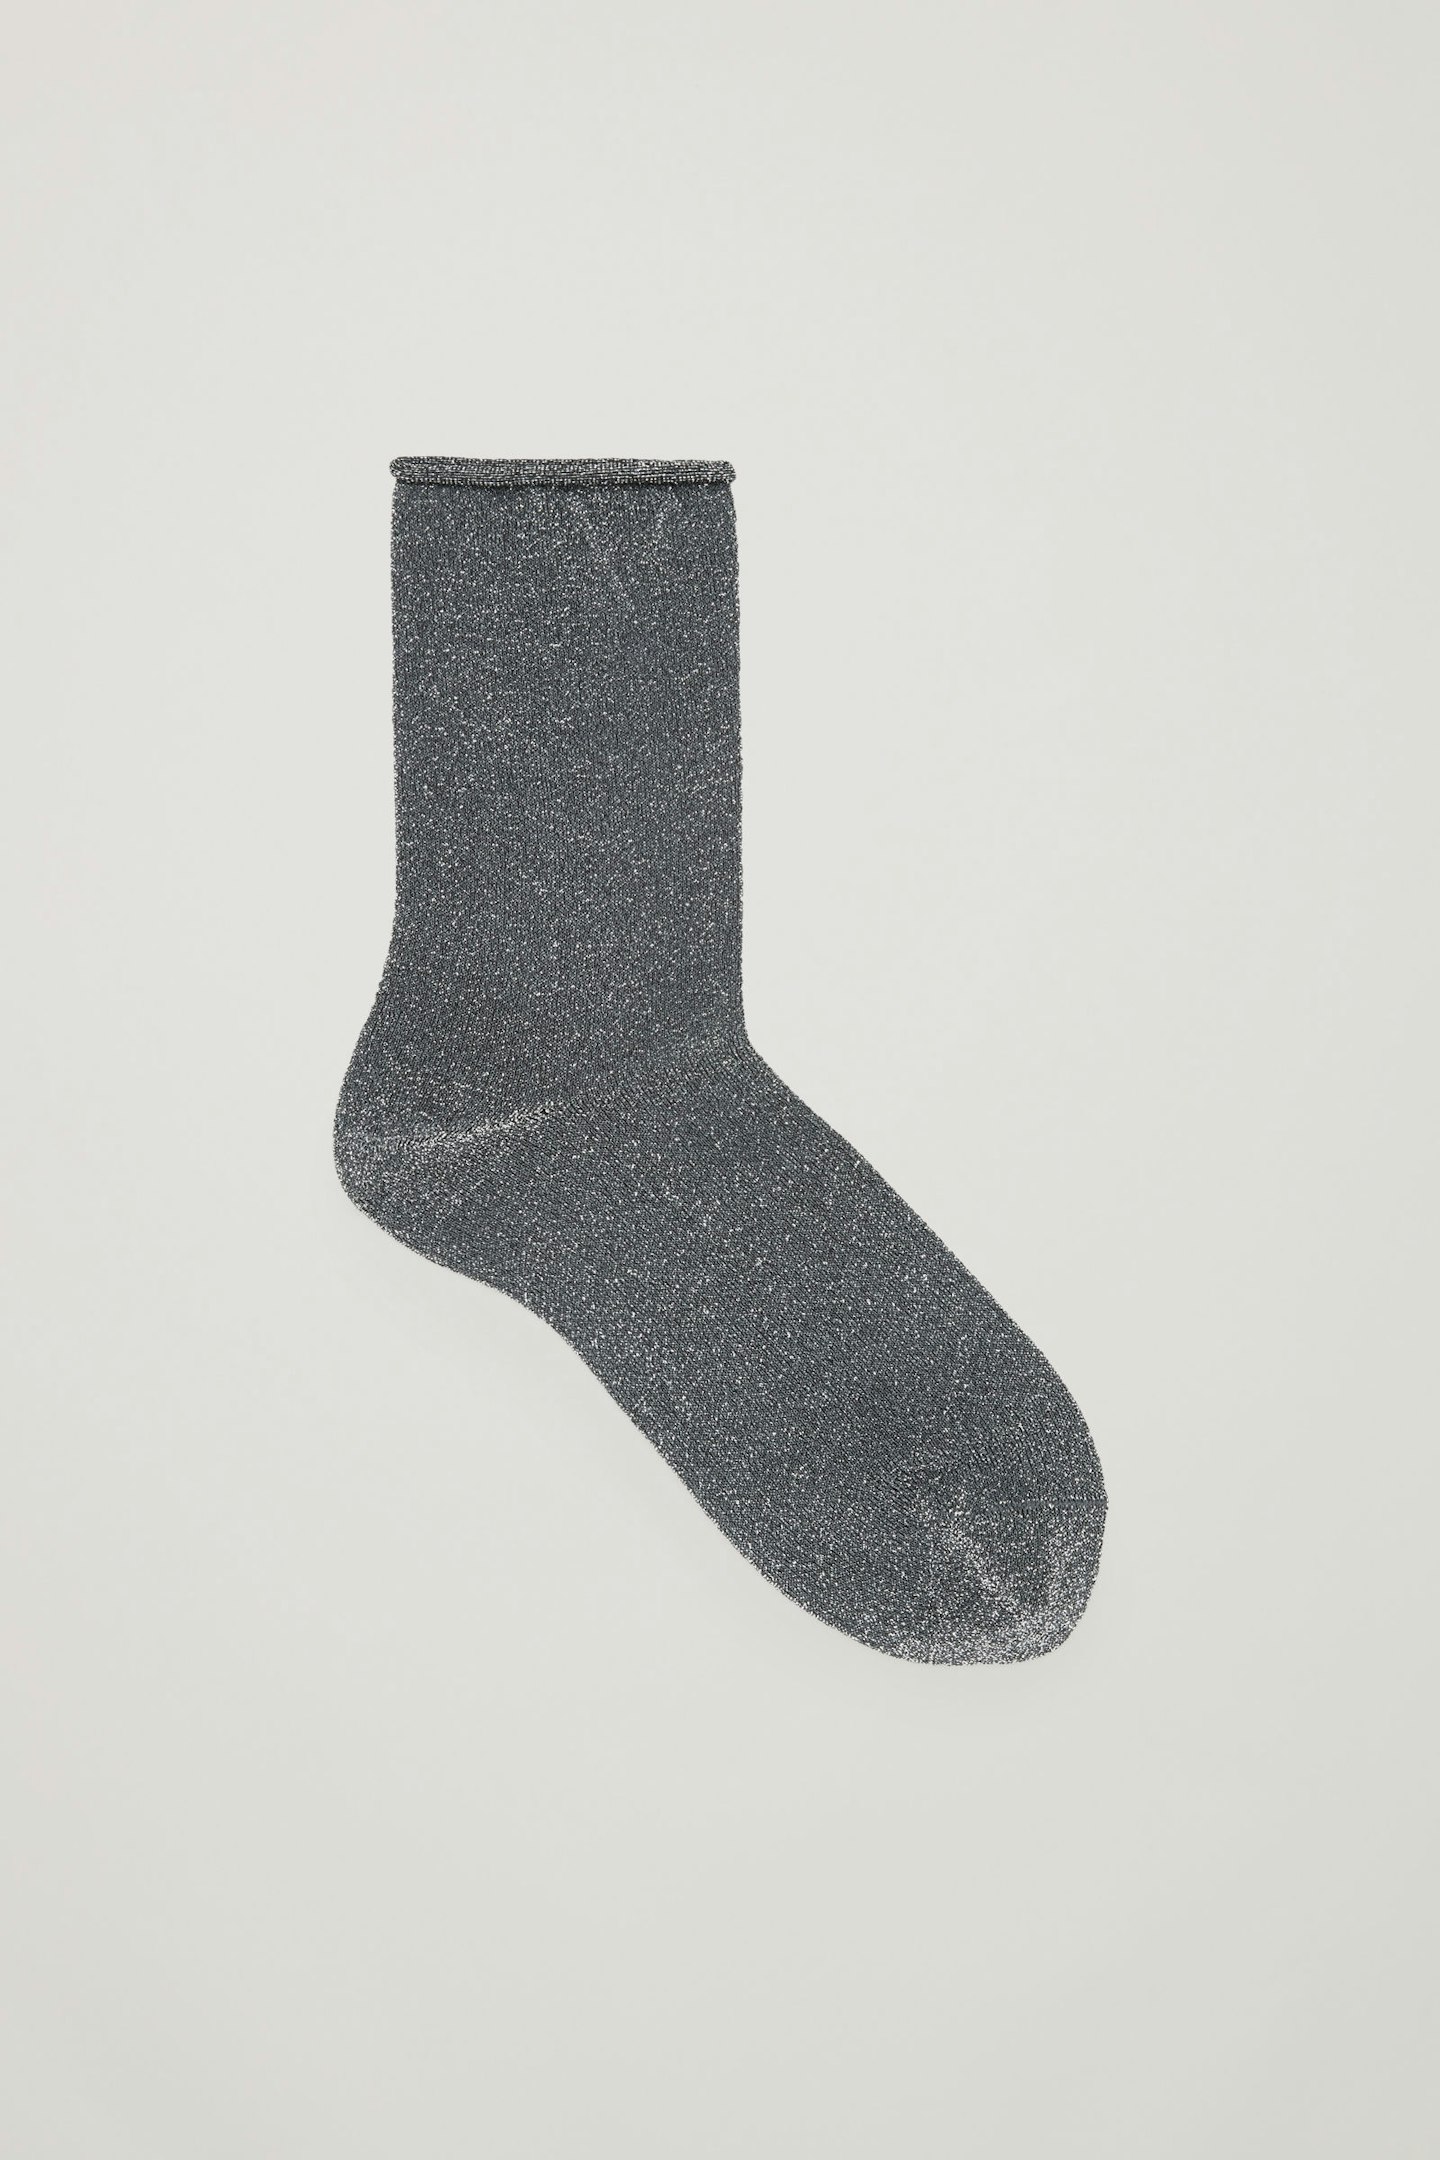 cos silver socks